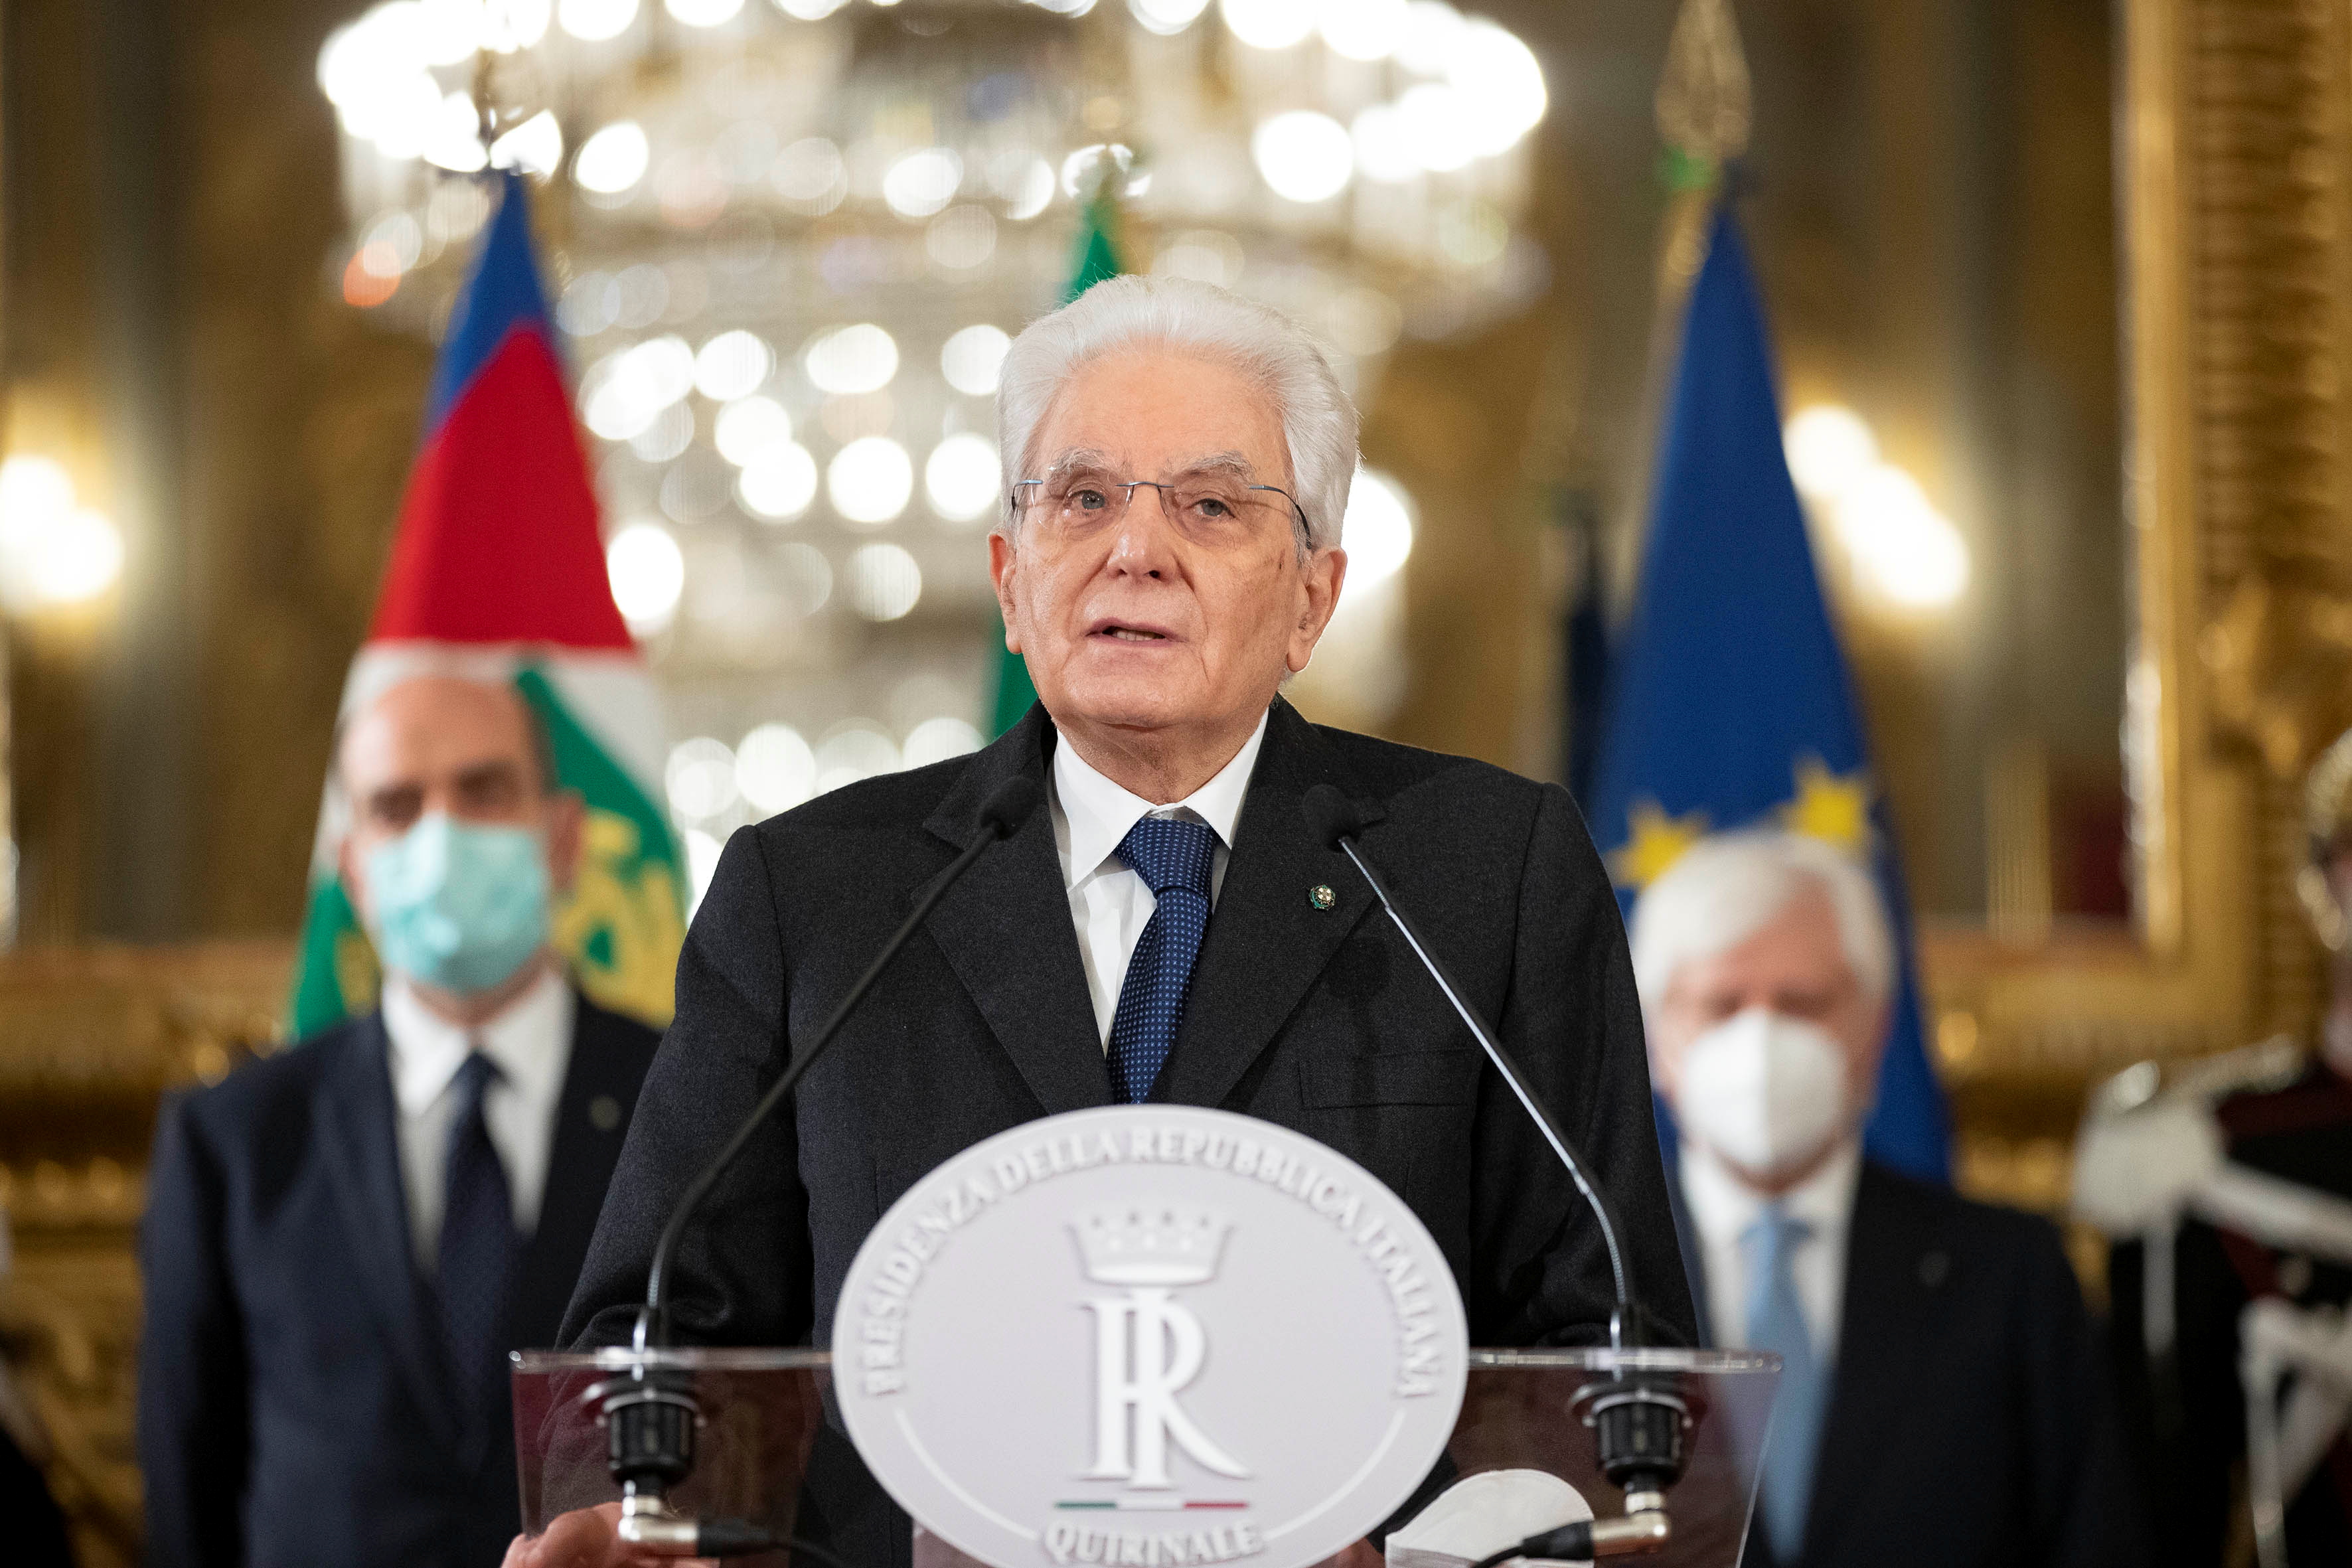 Italian President Sergio Mattarella holds talks at the Quirinale Palace in Rome